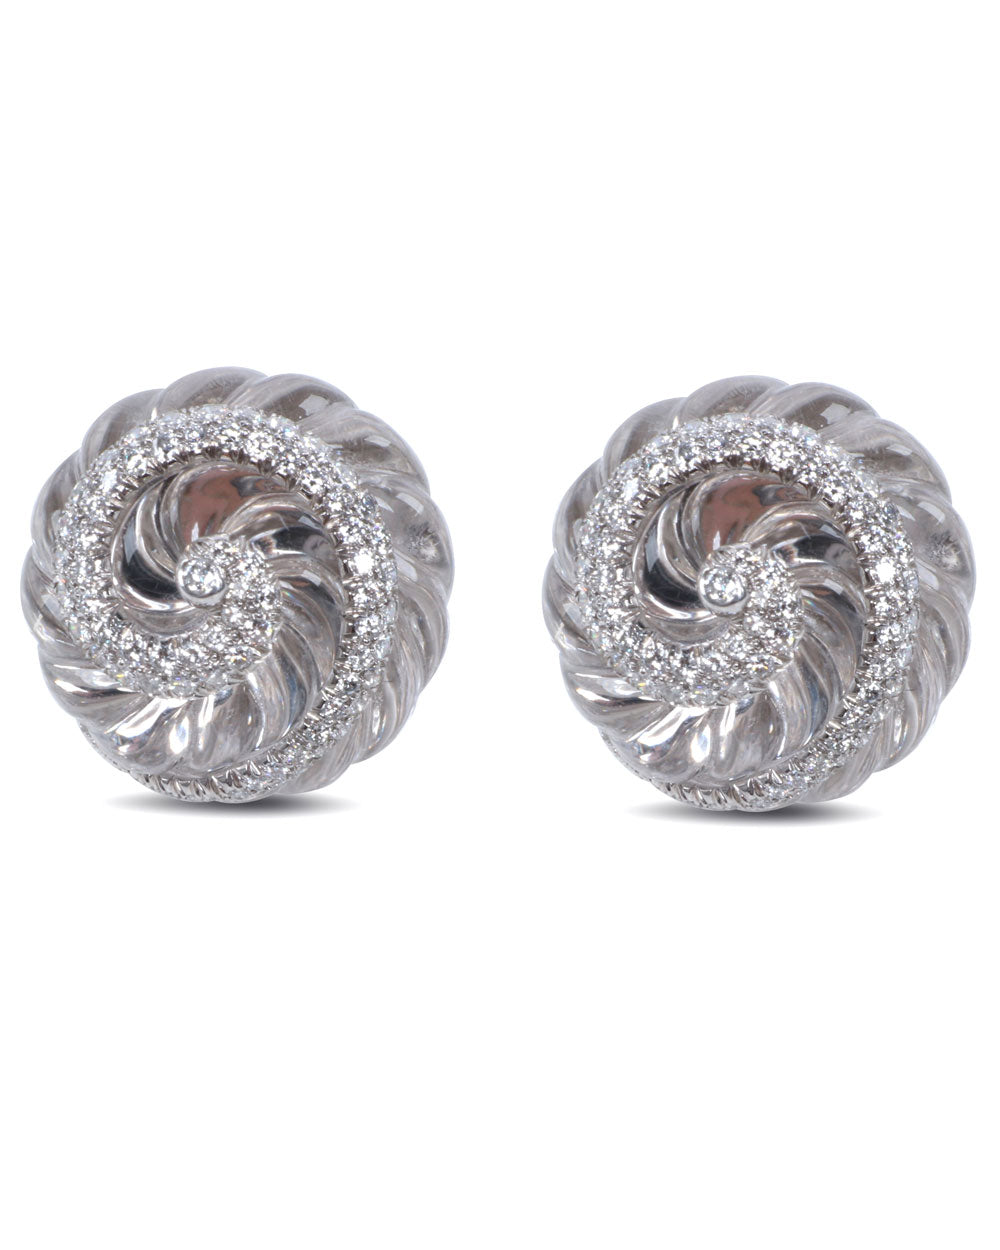 Diamond and Crystal Shell Earrings